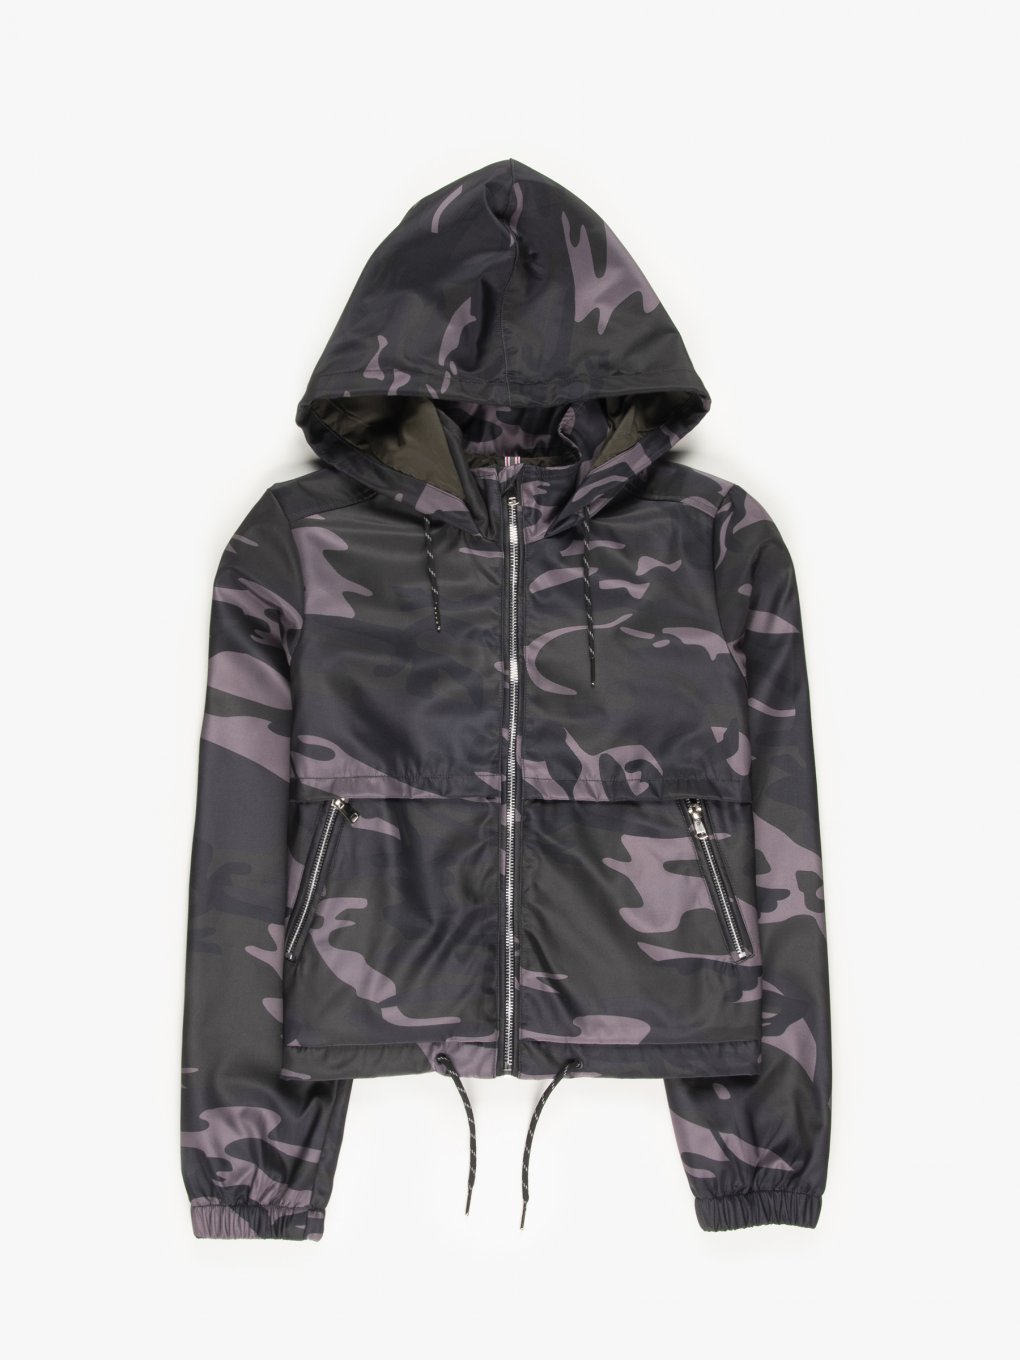 Camo print hooded jacket